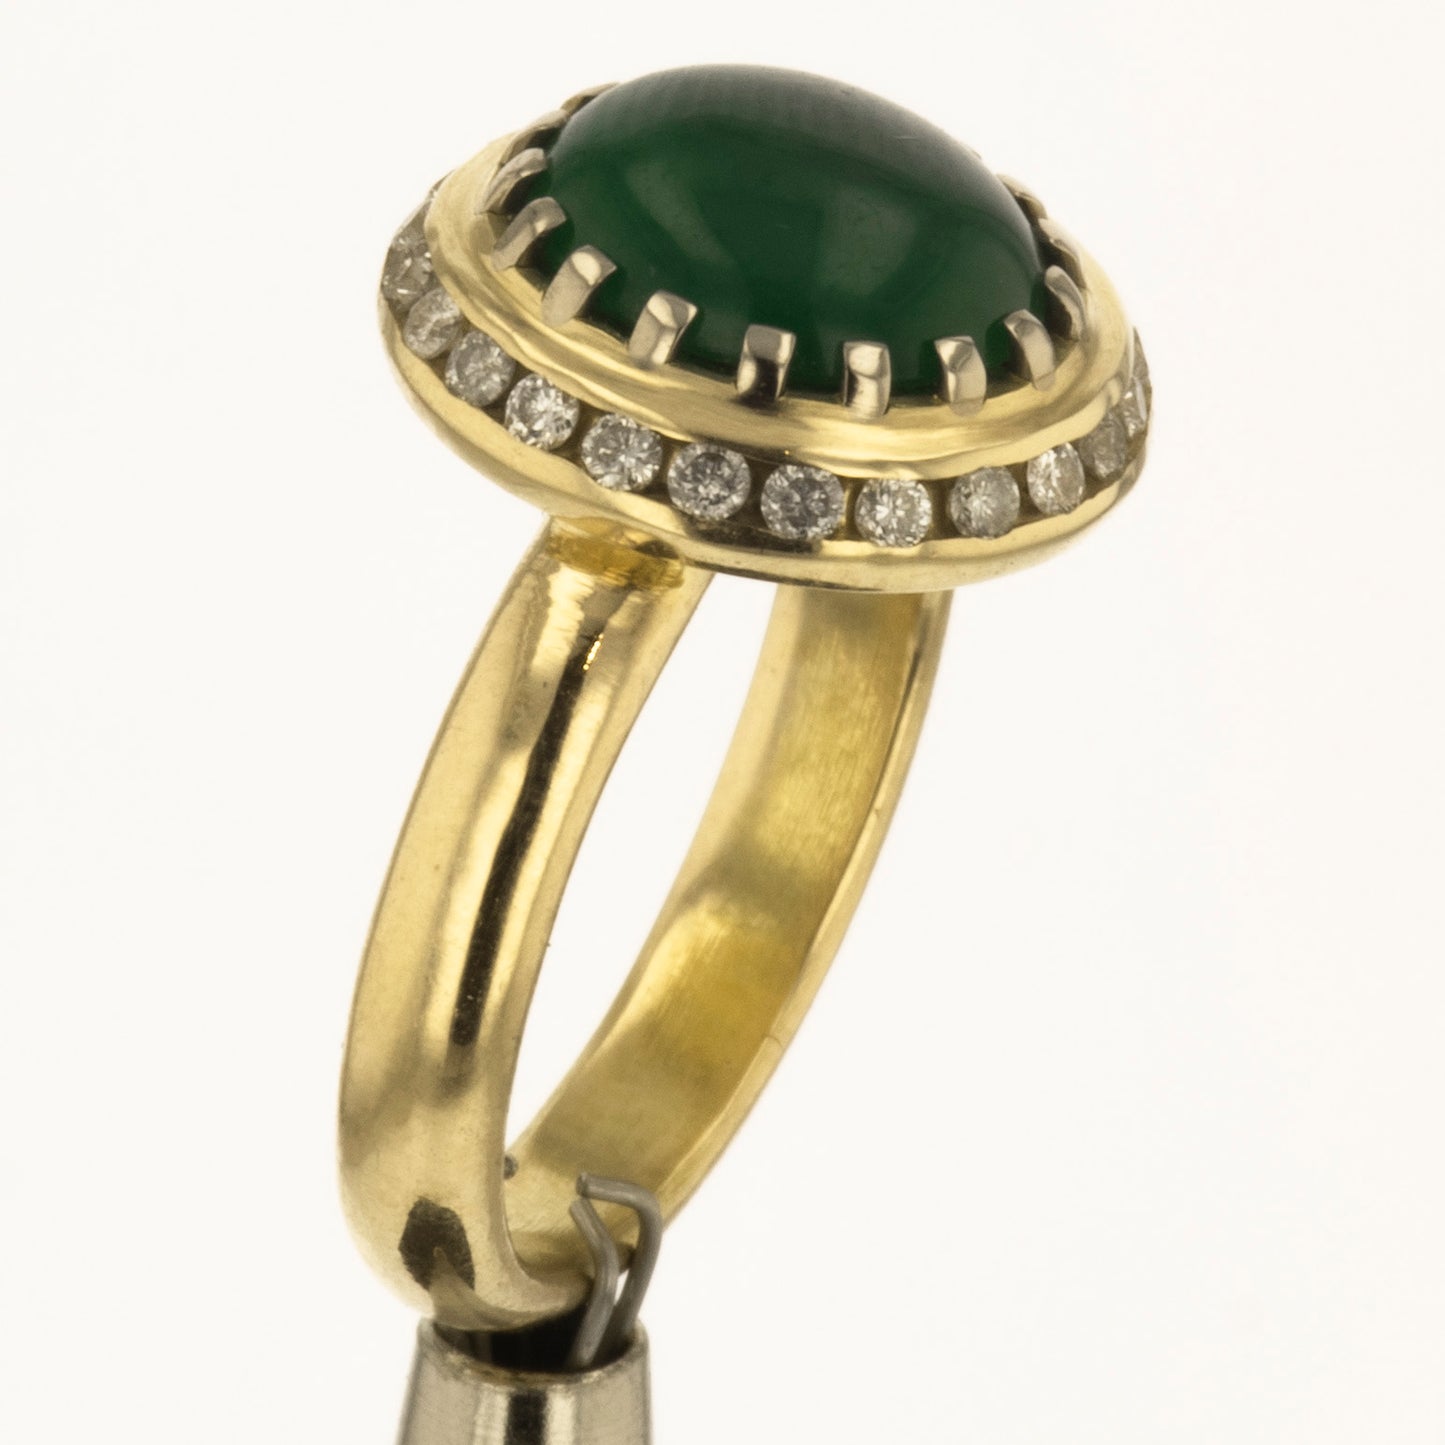 Jade engagement ring